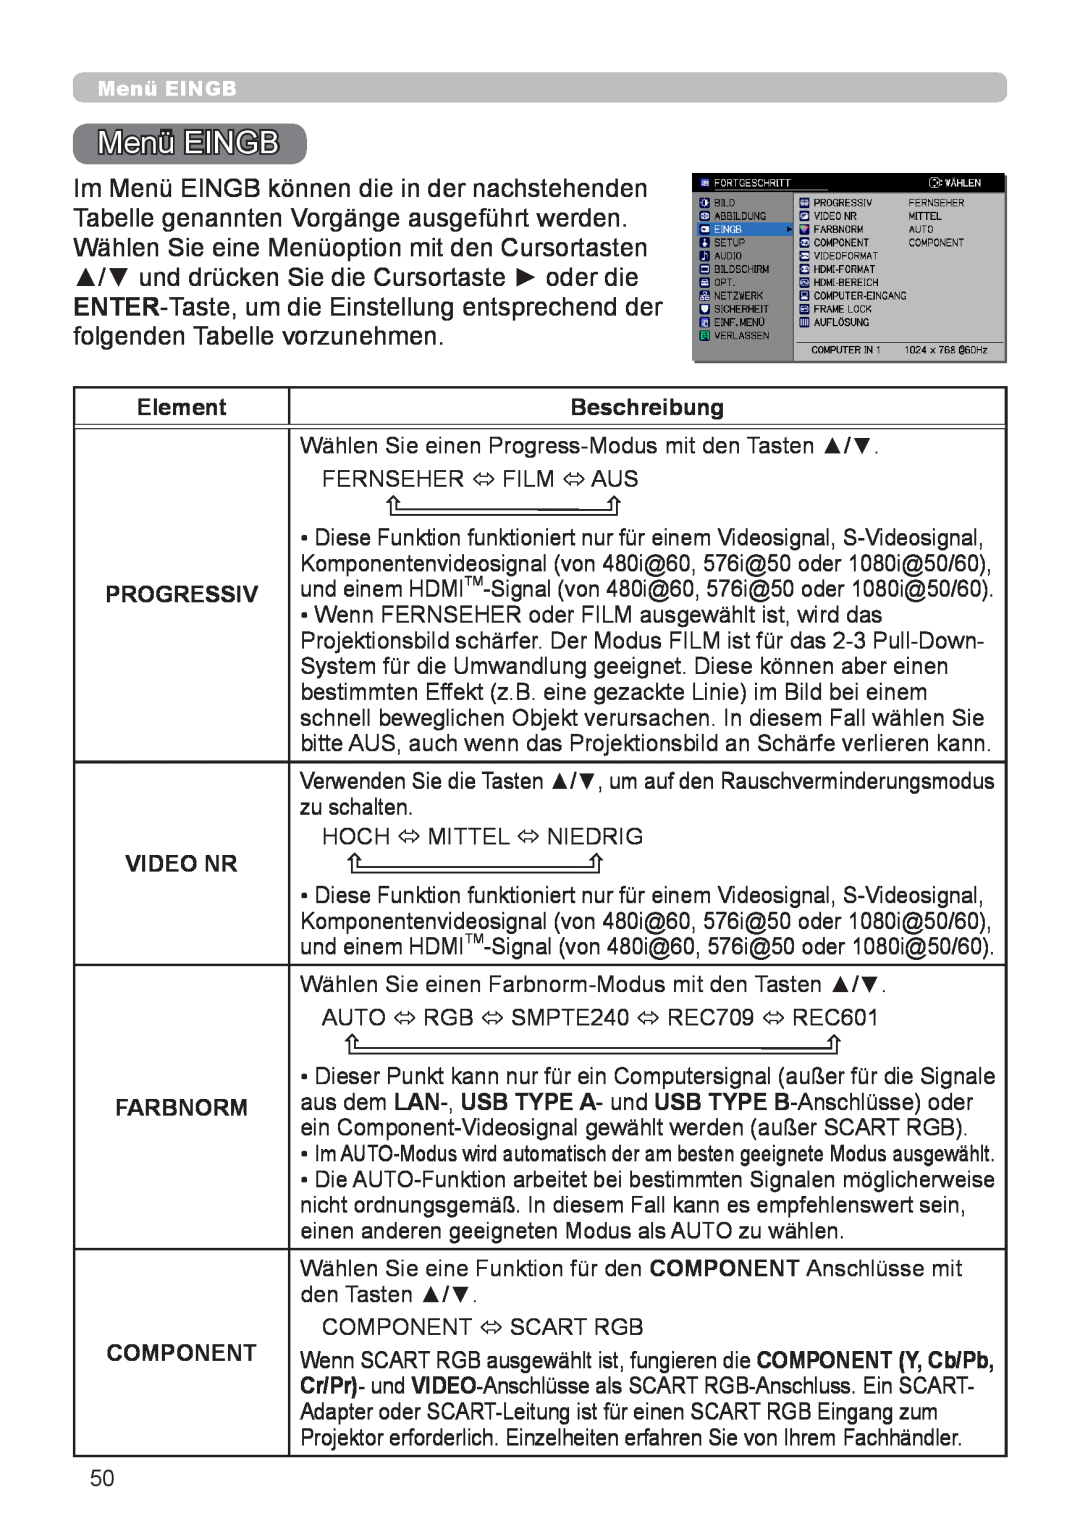 InFocus IN5132 user manual Menü EINGB, Element, Beschreibung, Progressiv, Video Nr, Farbnorm, Component 